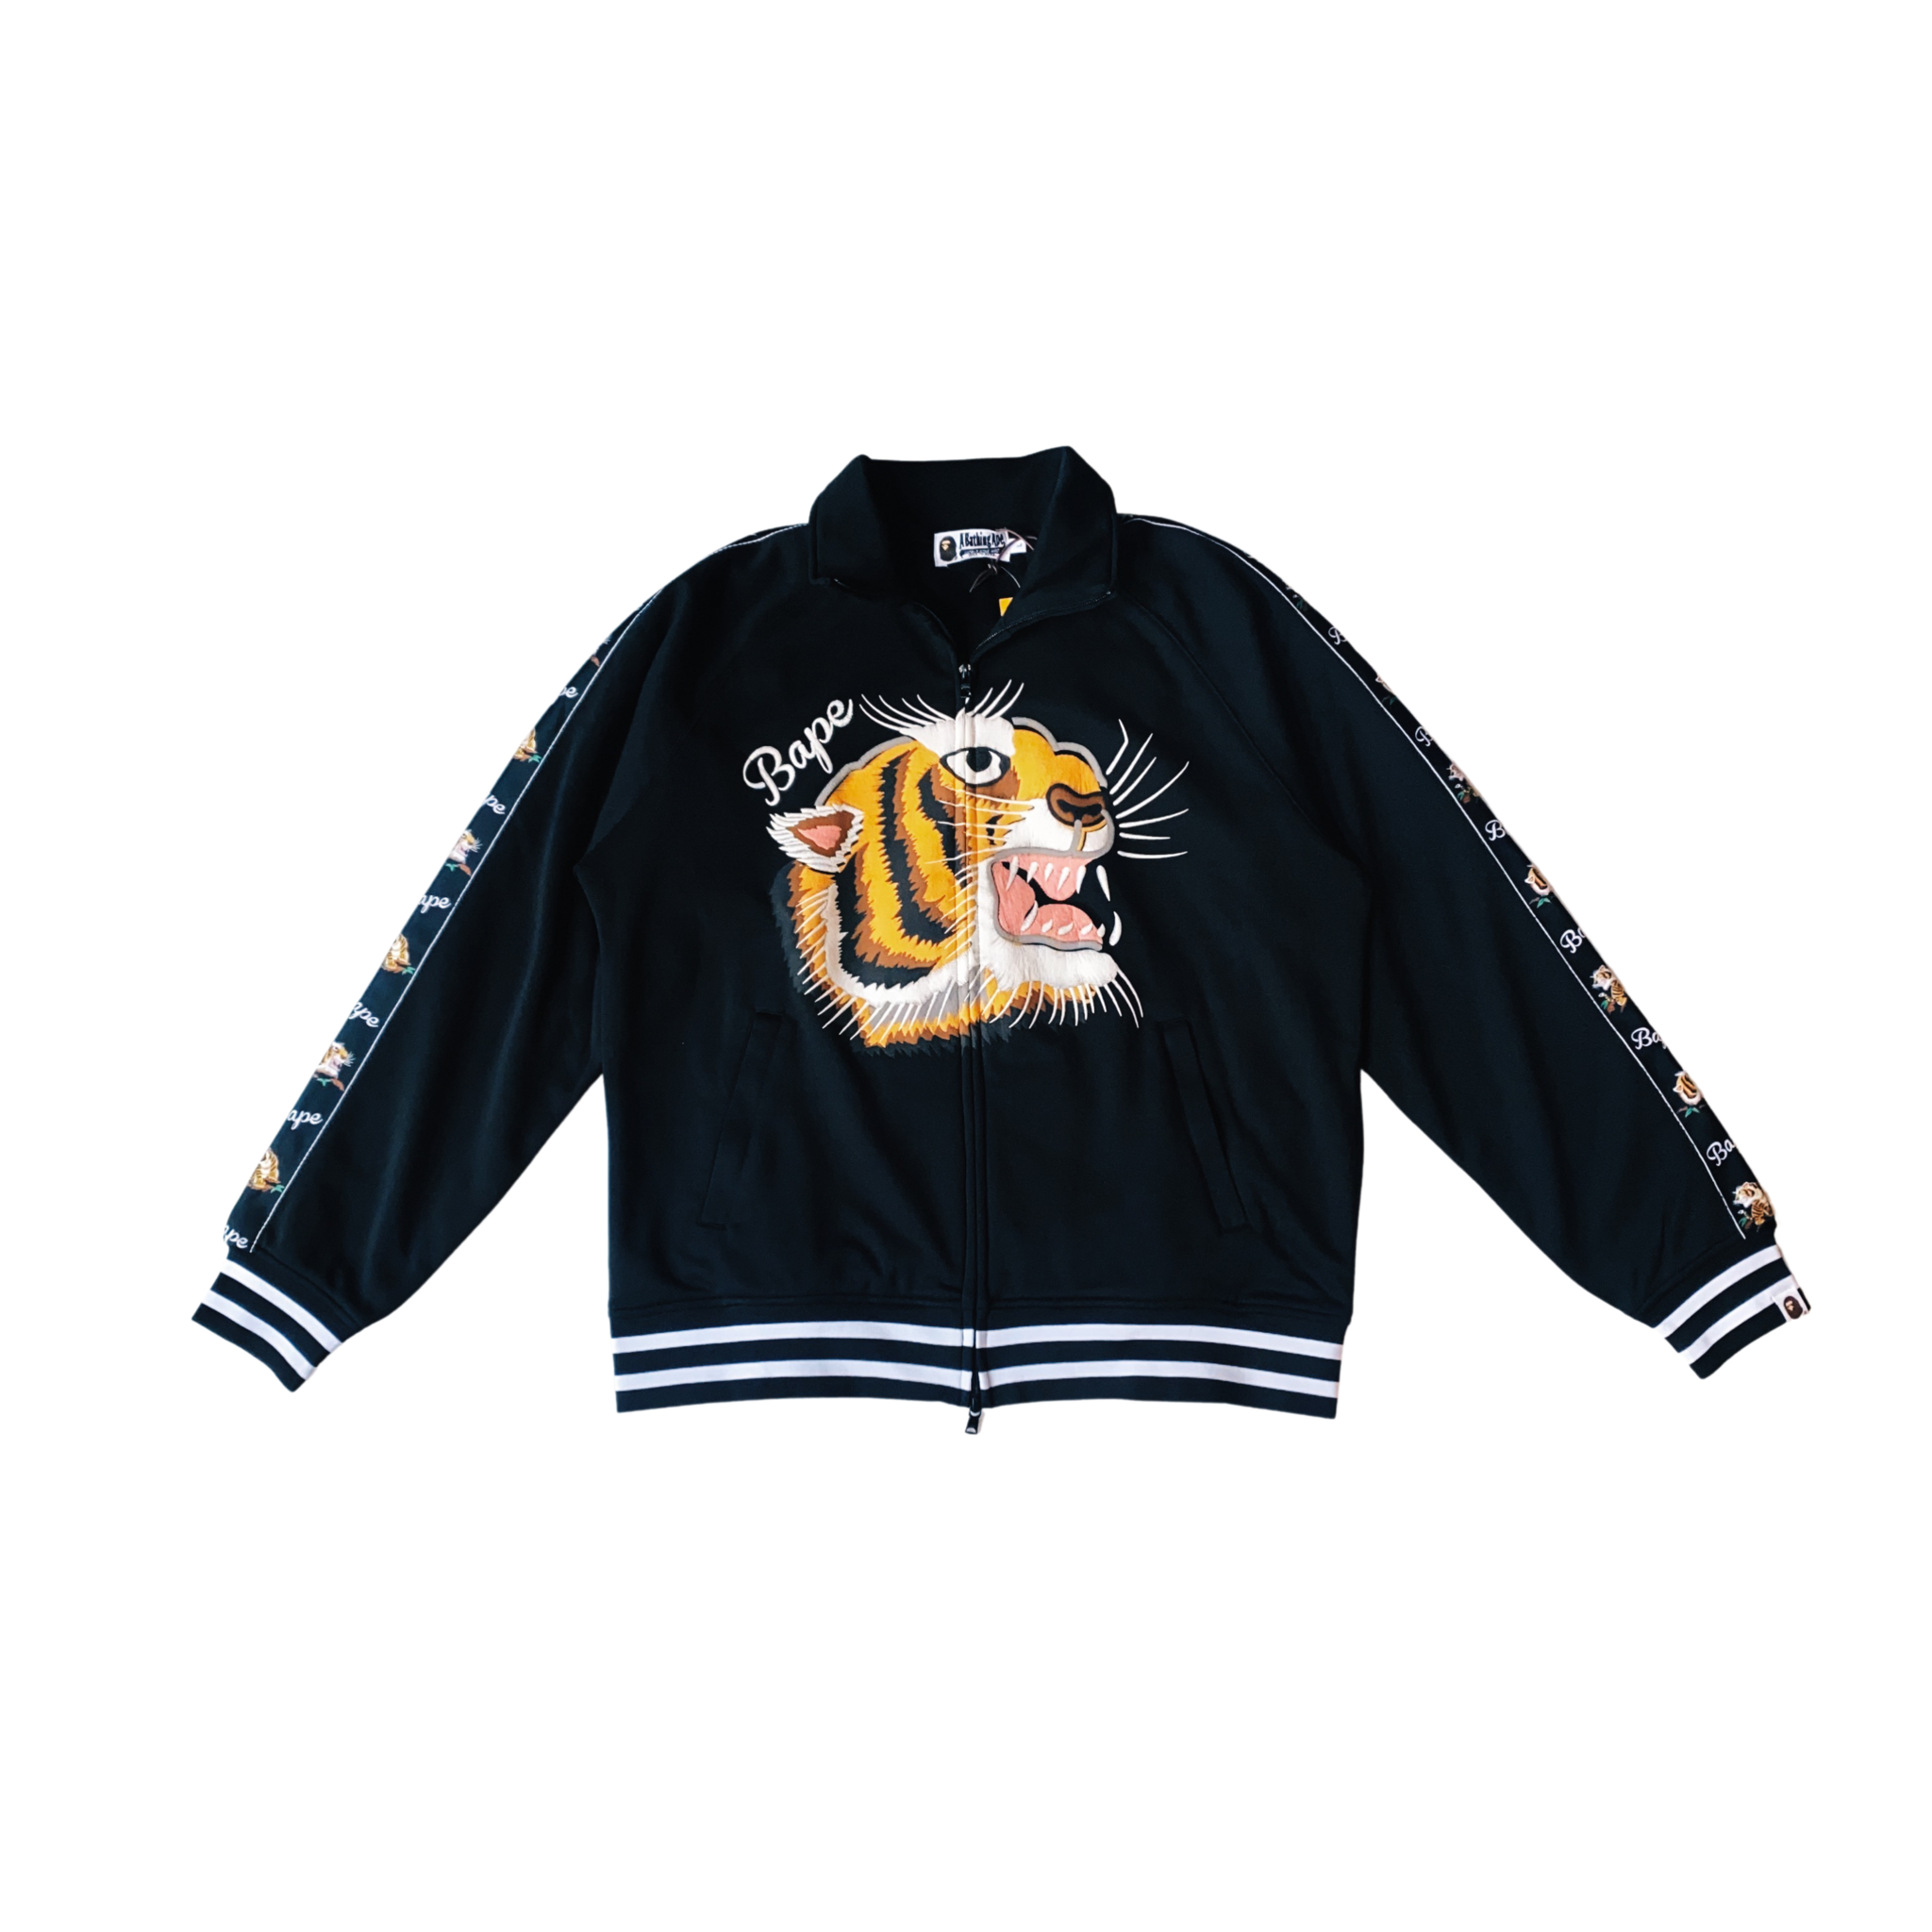 BAPE Tiger Jersey Top Jacket Black